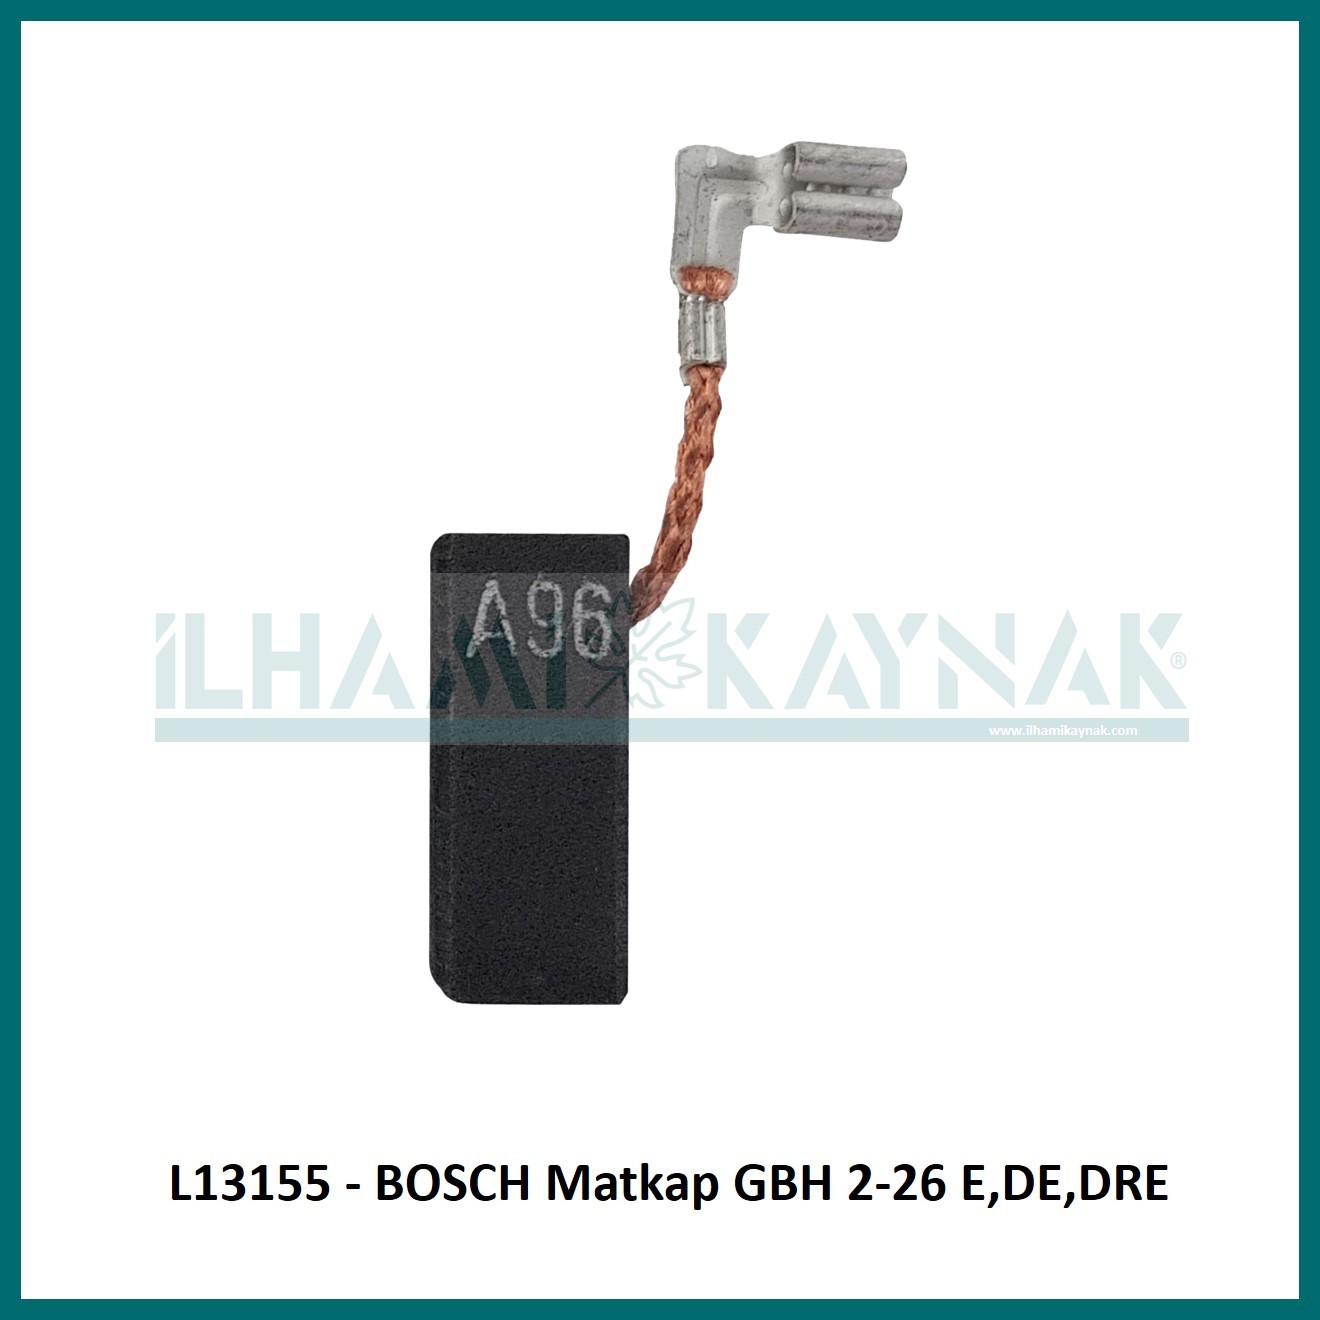 L13155 - BOSCH Matkap GBH 2-26 E,DE,DRE - 5*8*19 mm - Minimum Satın Alım: 10 Adet.